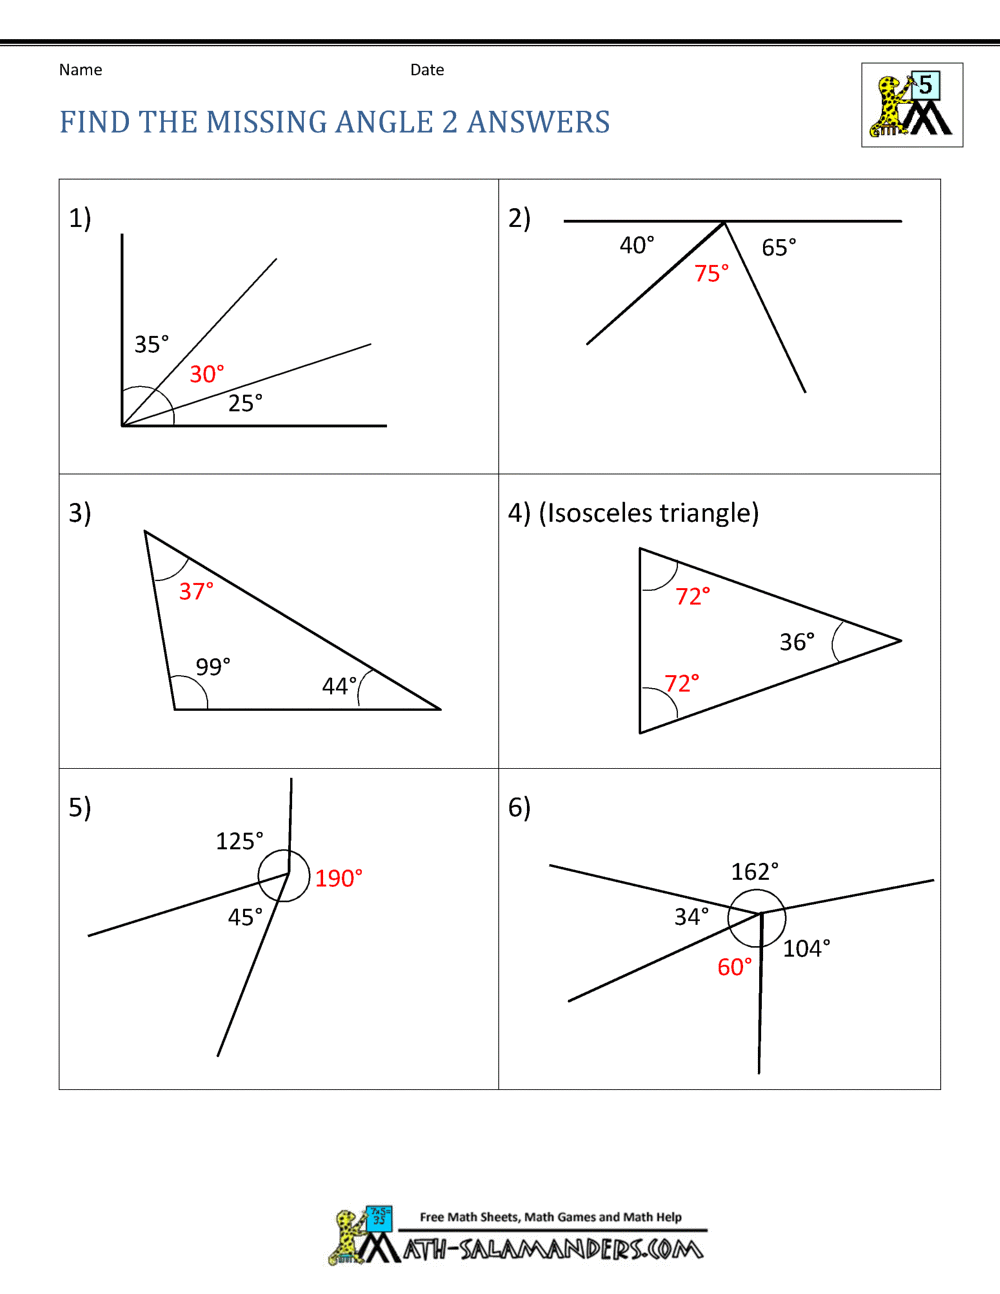 22th Grade Geometry Inside Finding Missing Angles Worksheet